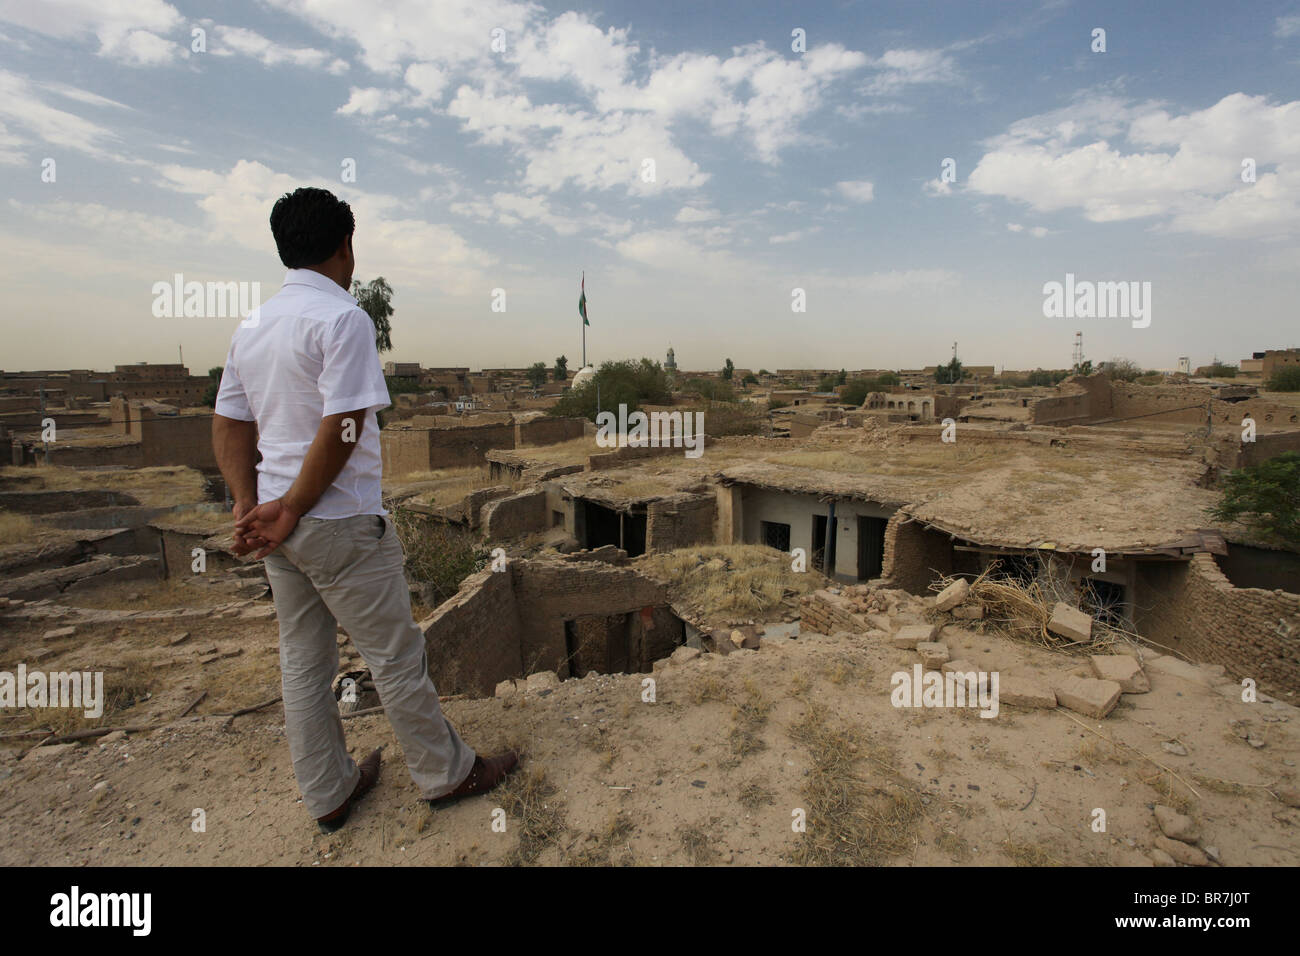 A Kurdish man gazing at the old Kalaa citadel in the city of Erbil also spelled Arbil or Irbil the capital city of Kurdistan Region in northern Iraq. Stock Photo